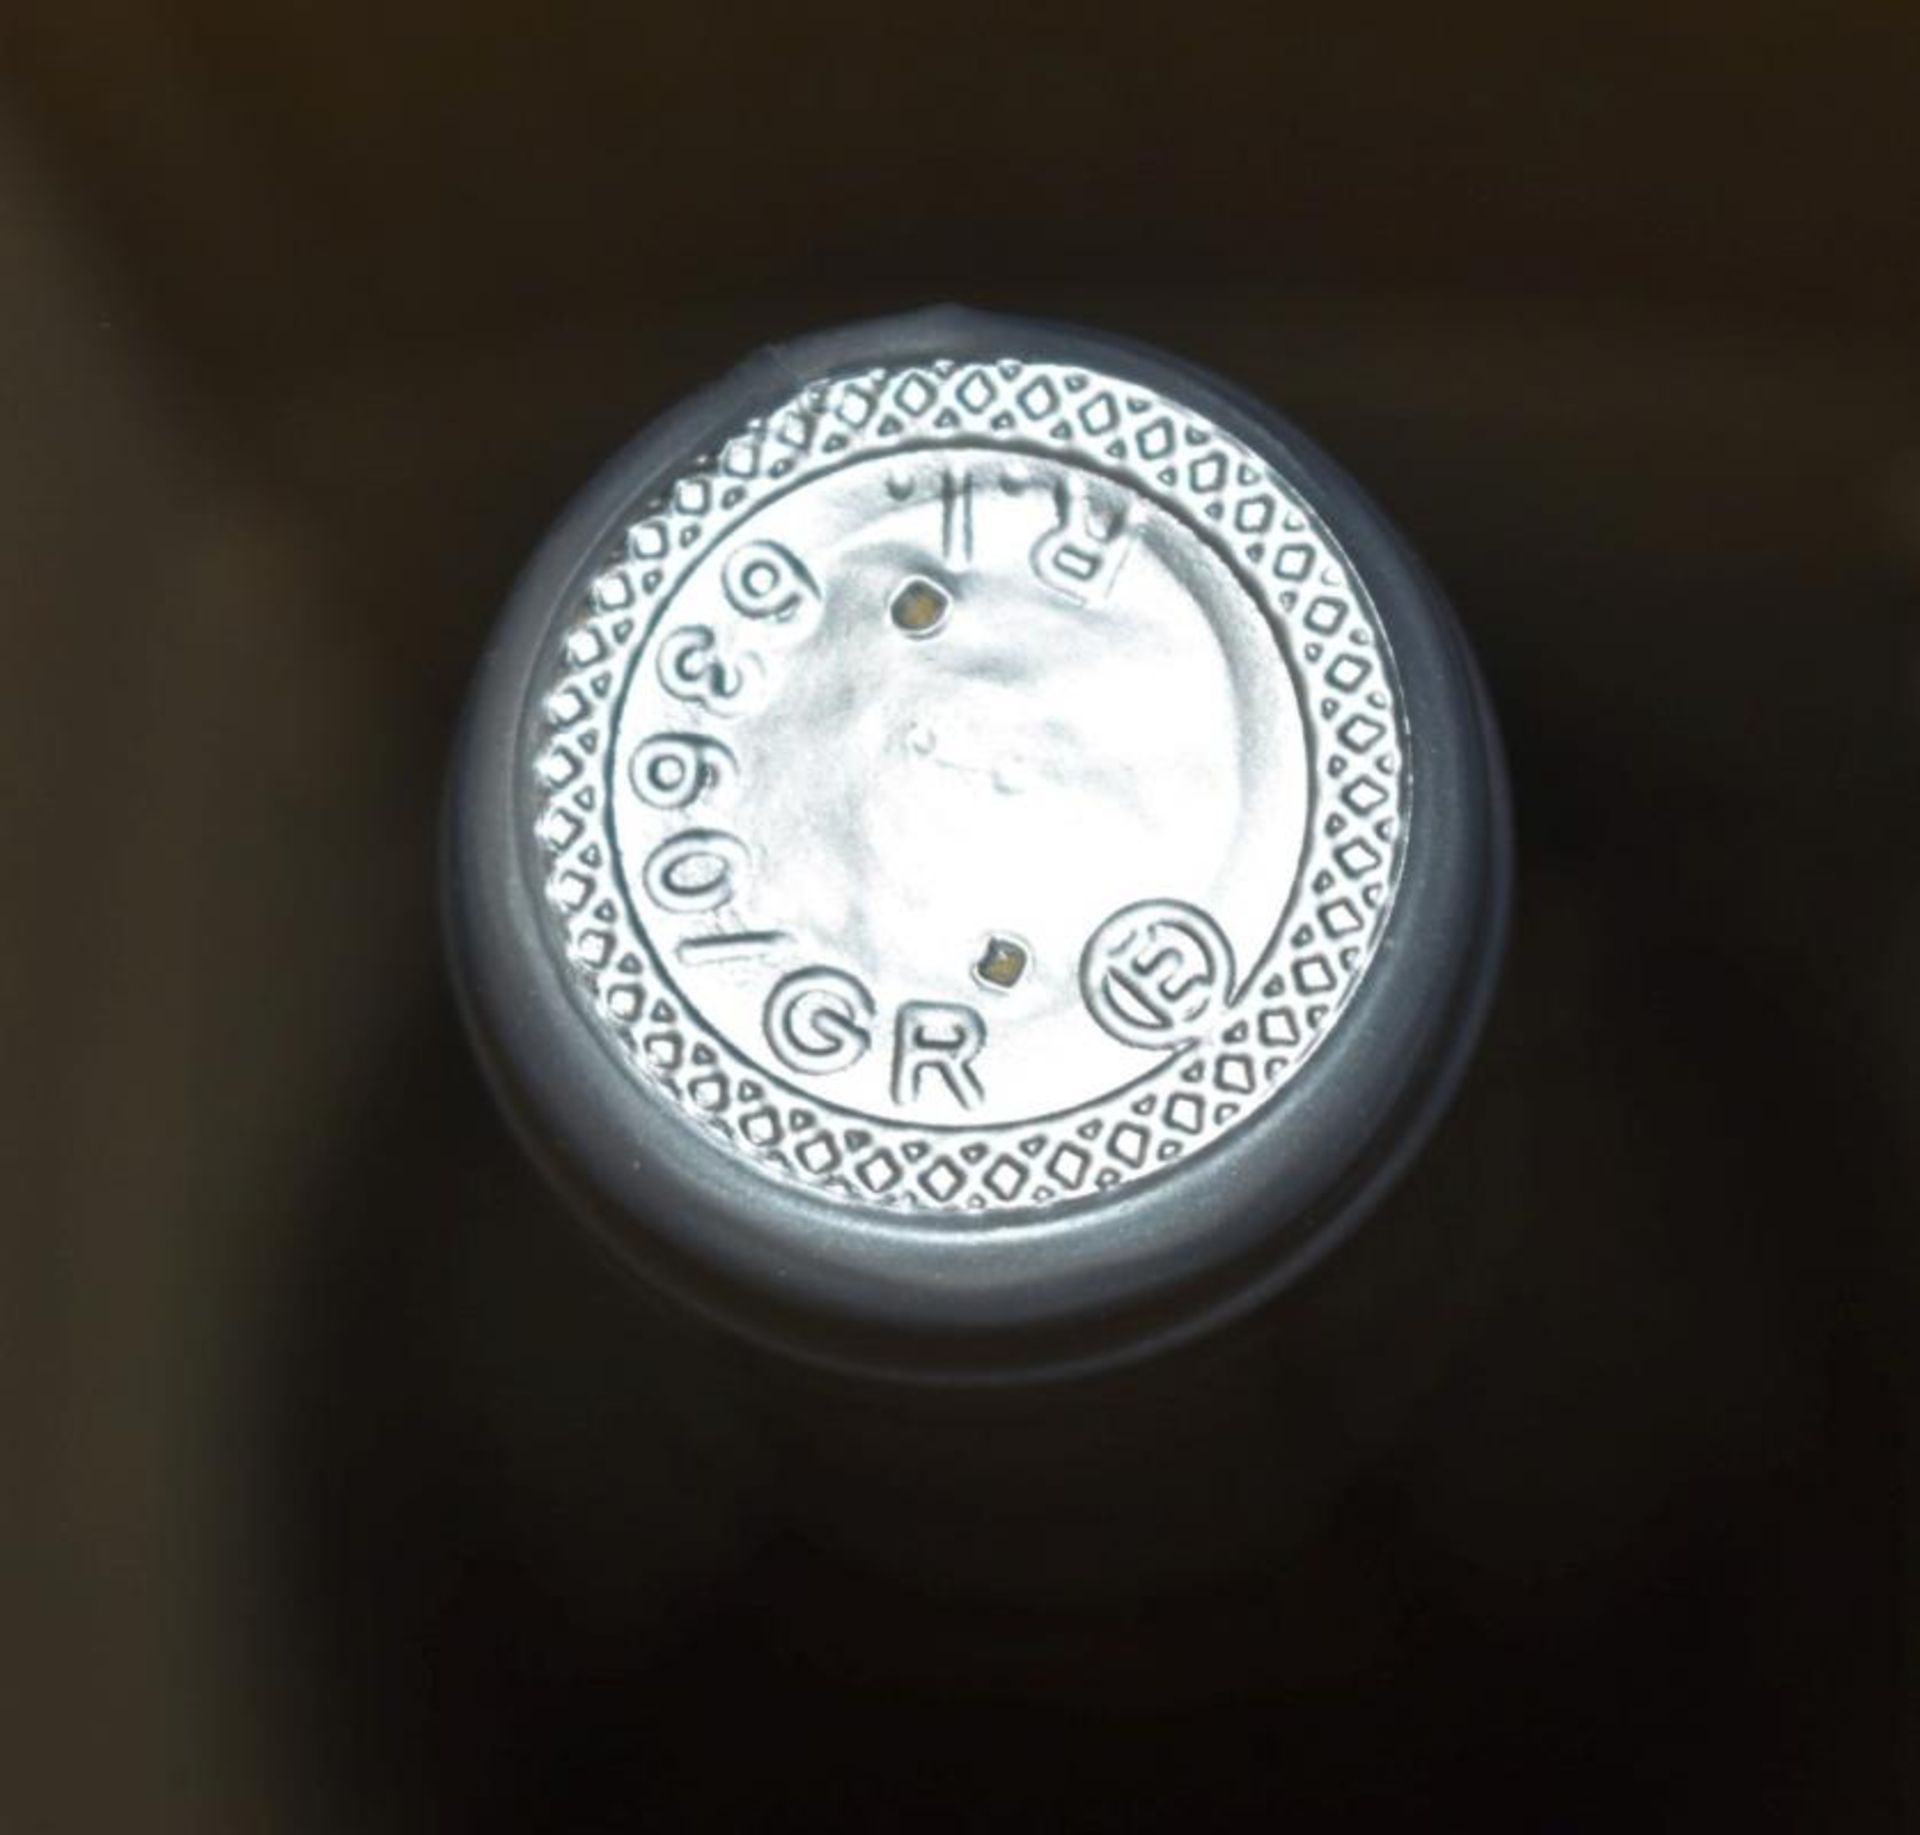 12 x Bottles of Stefano Di Blasi 2019 Vermentino Toscana 13.5% Wine - 750ml Bottles - Drink Until - Image 7 of 7